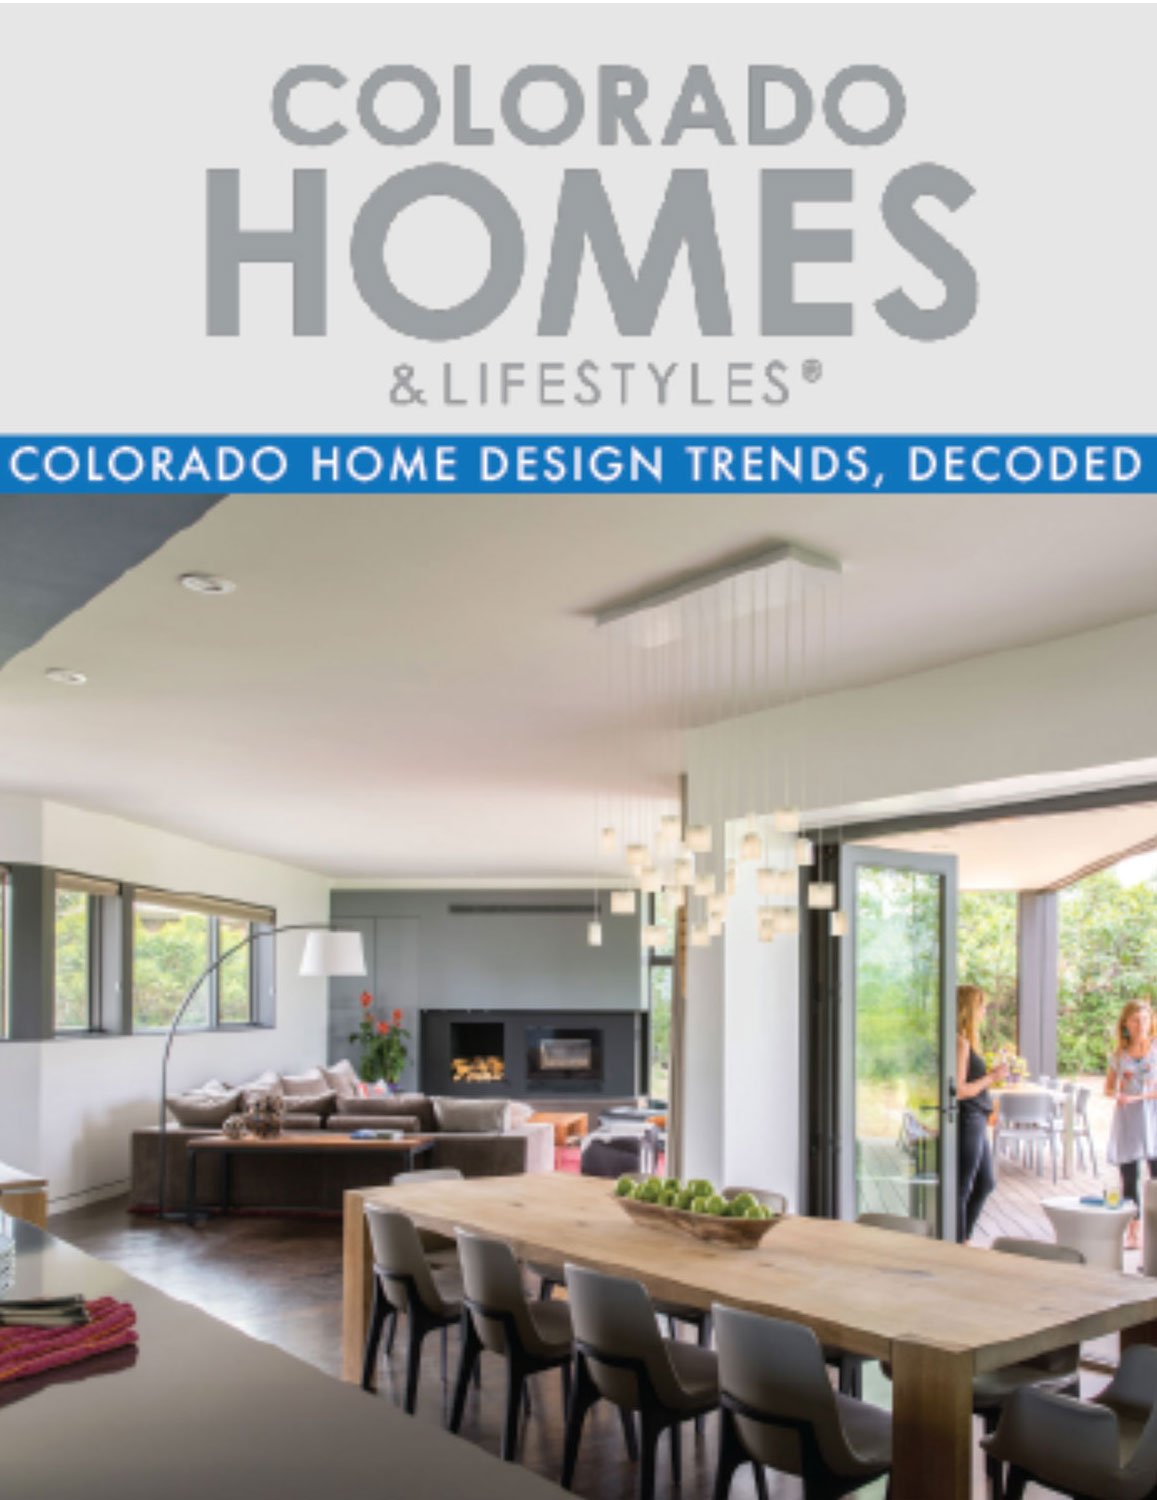 Colorado Home Design Trends, Decoded